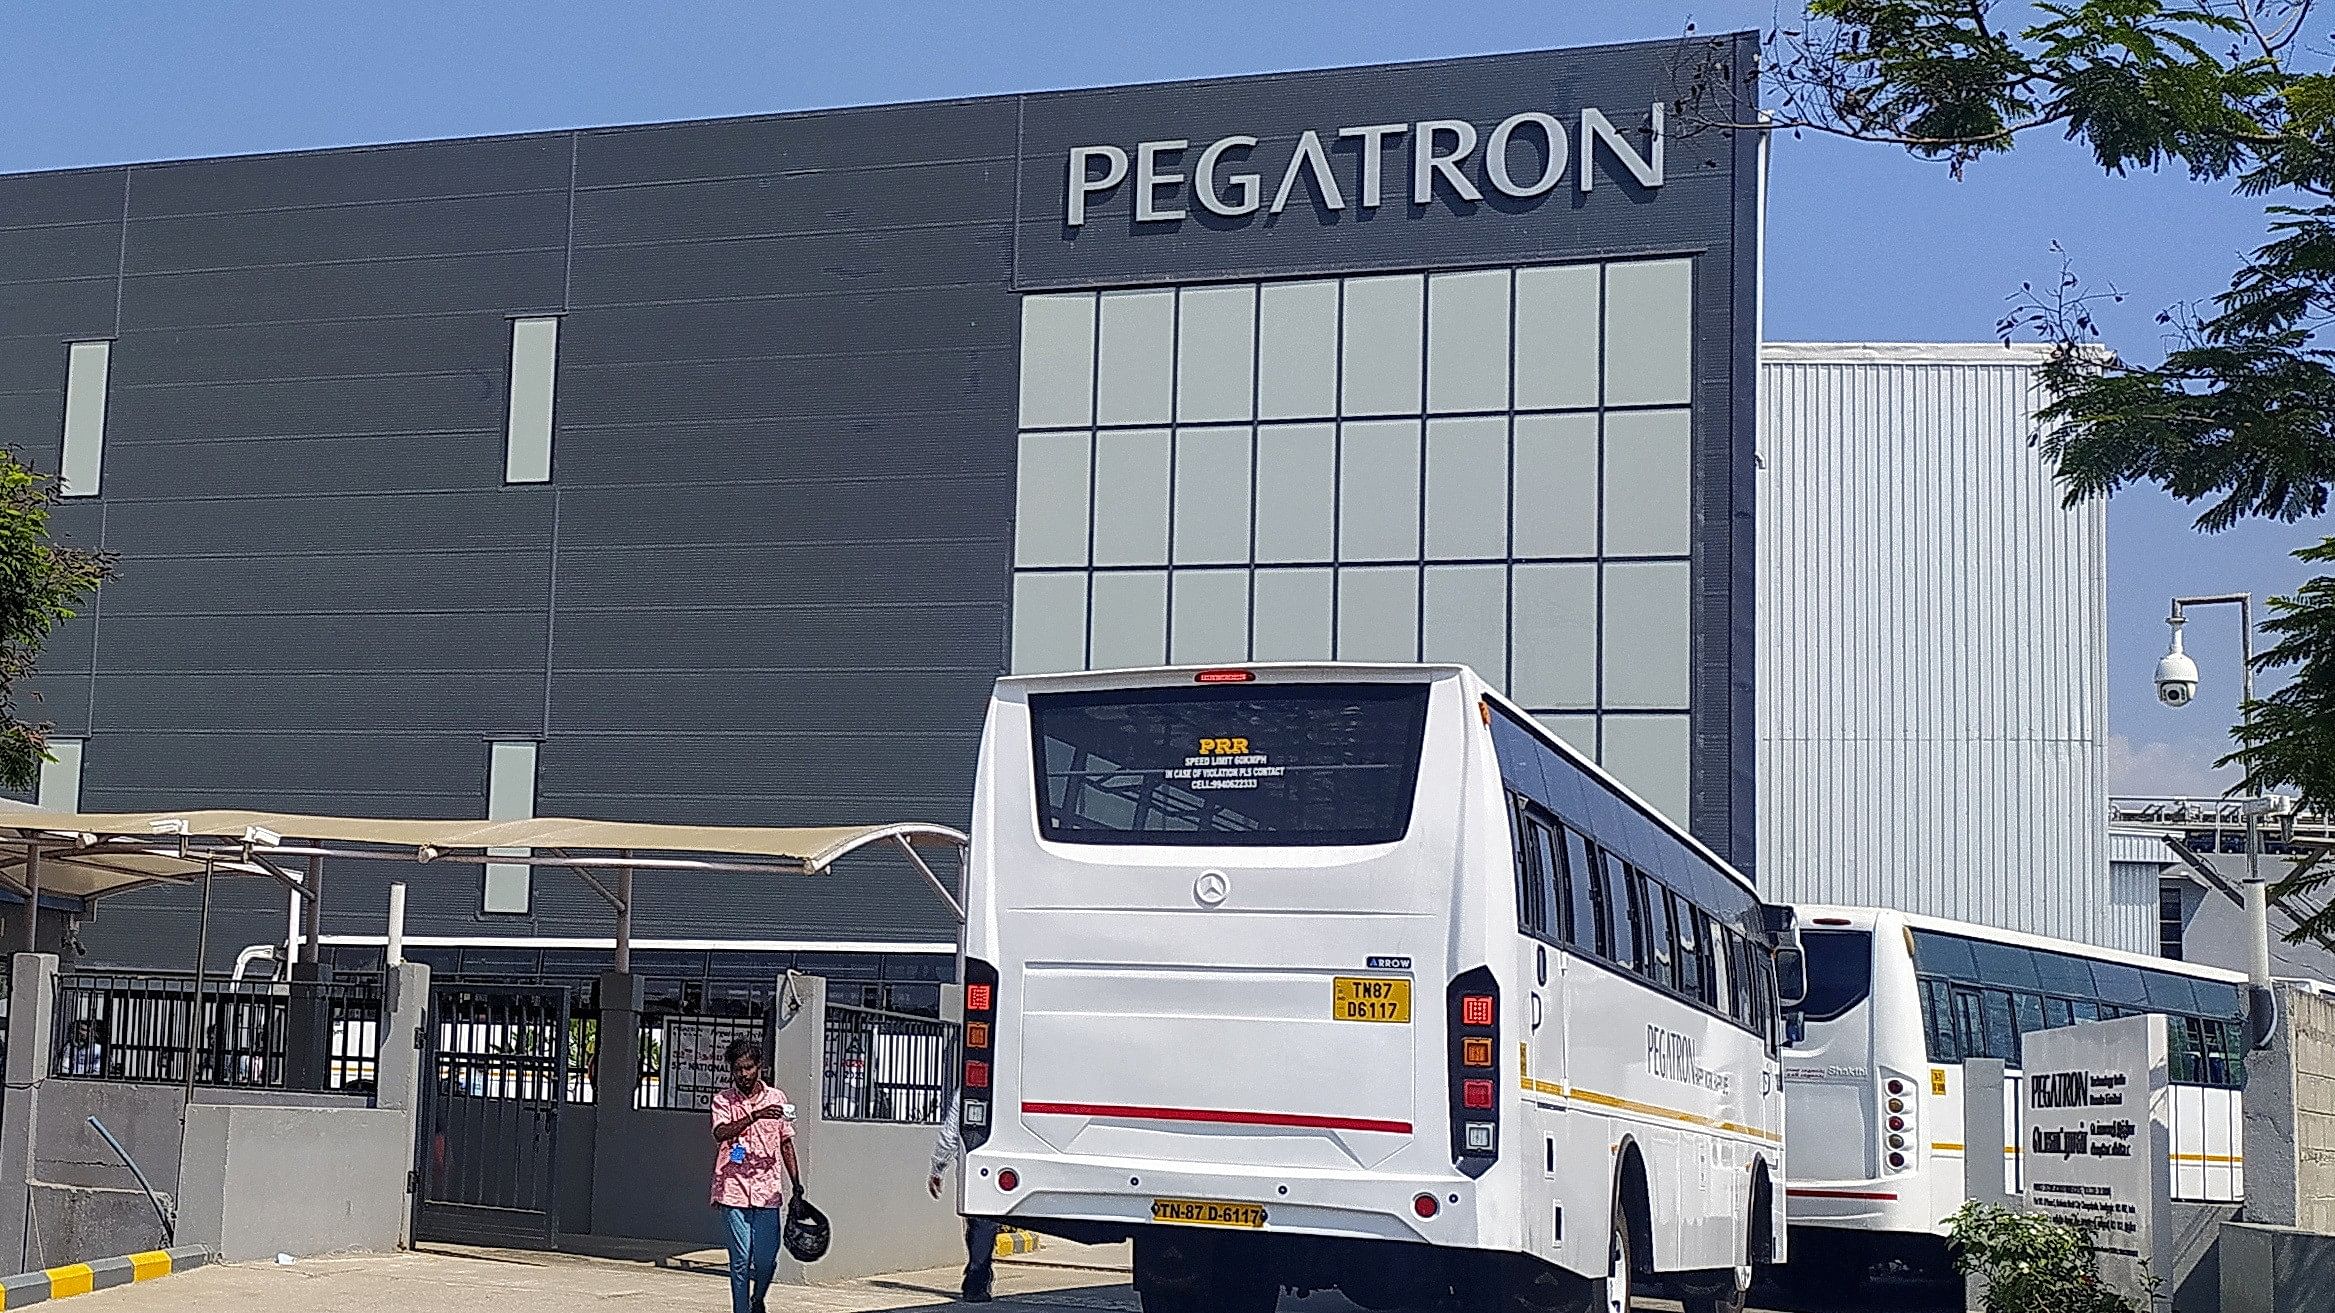 <div class="paragraphs"><p>Employee buses enter the Pegatron facility near Chennai, India, March 7, 2023.</p></div>